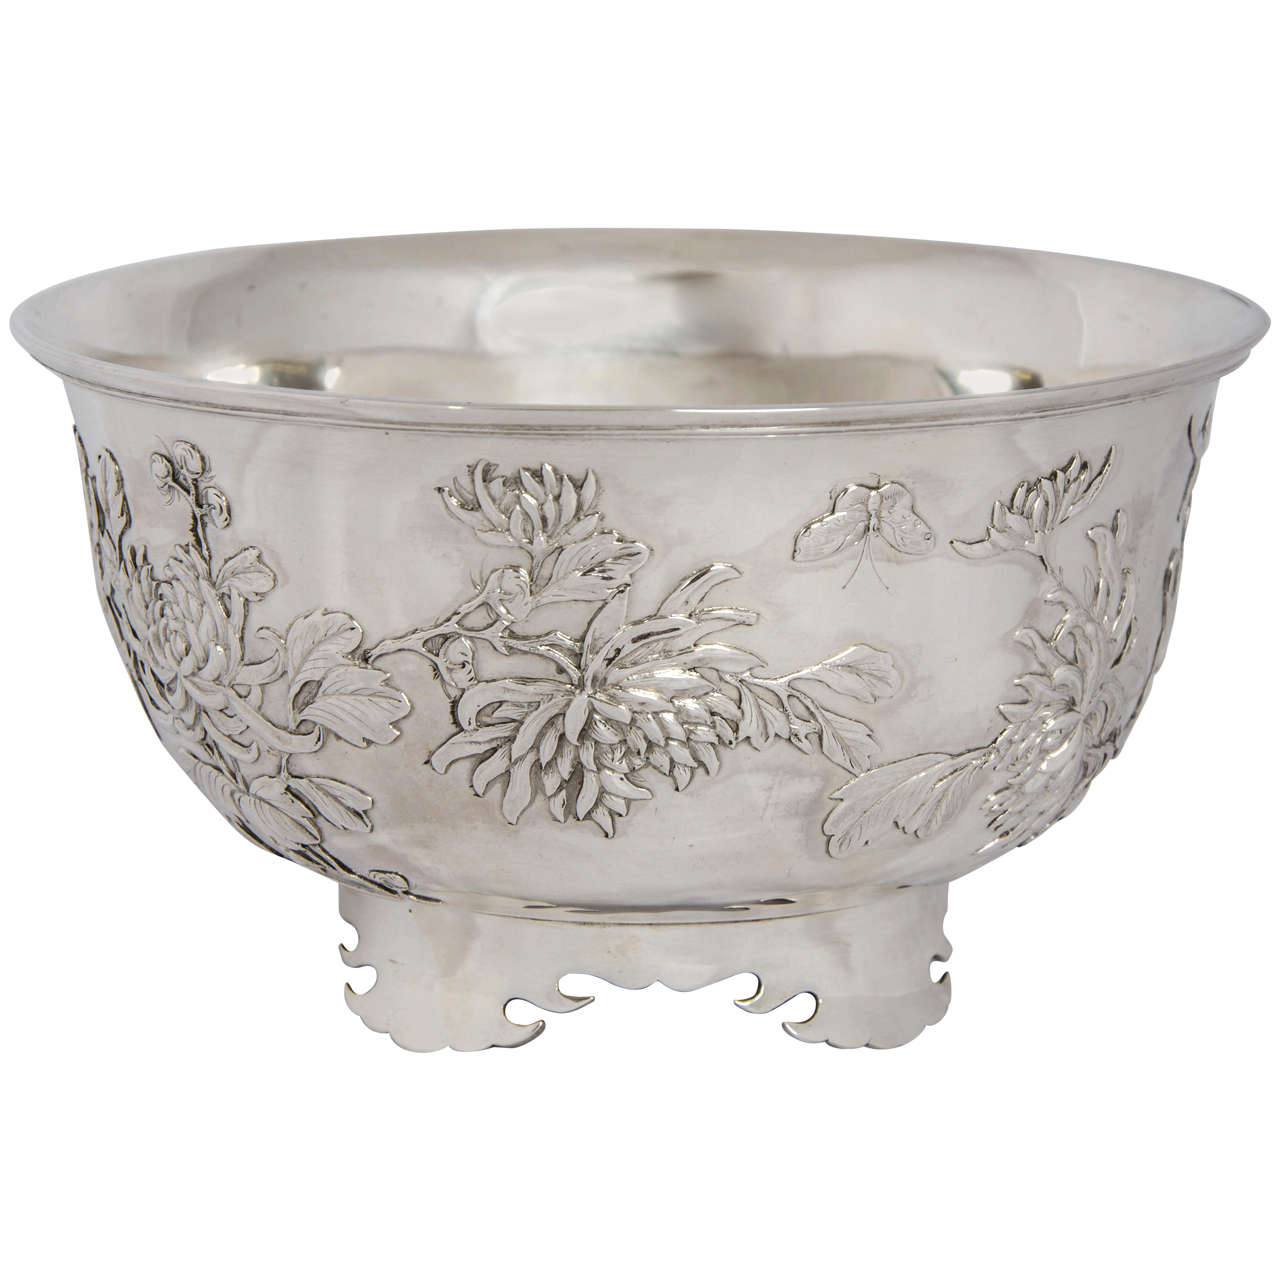 Chinese Export Silver Bowl with chrysanthemum, circa 1890, Wang Hing